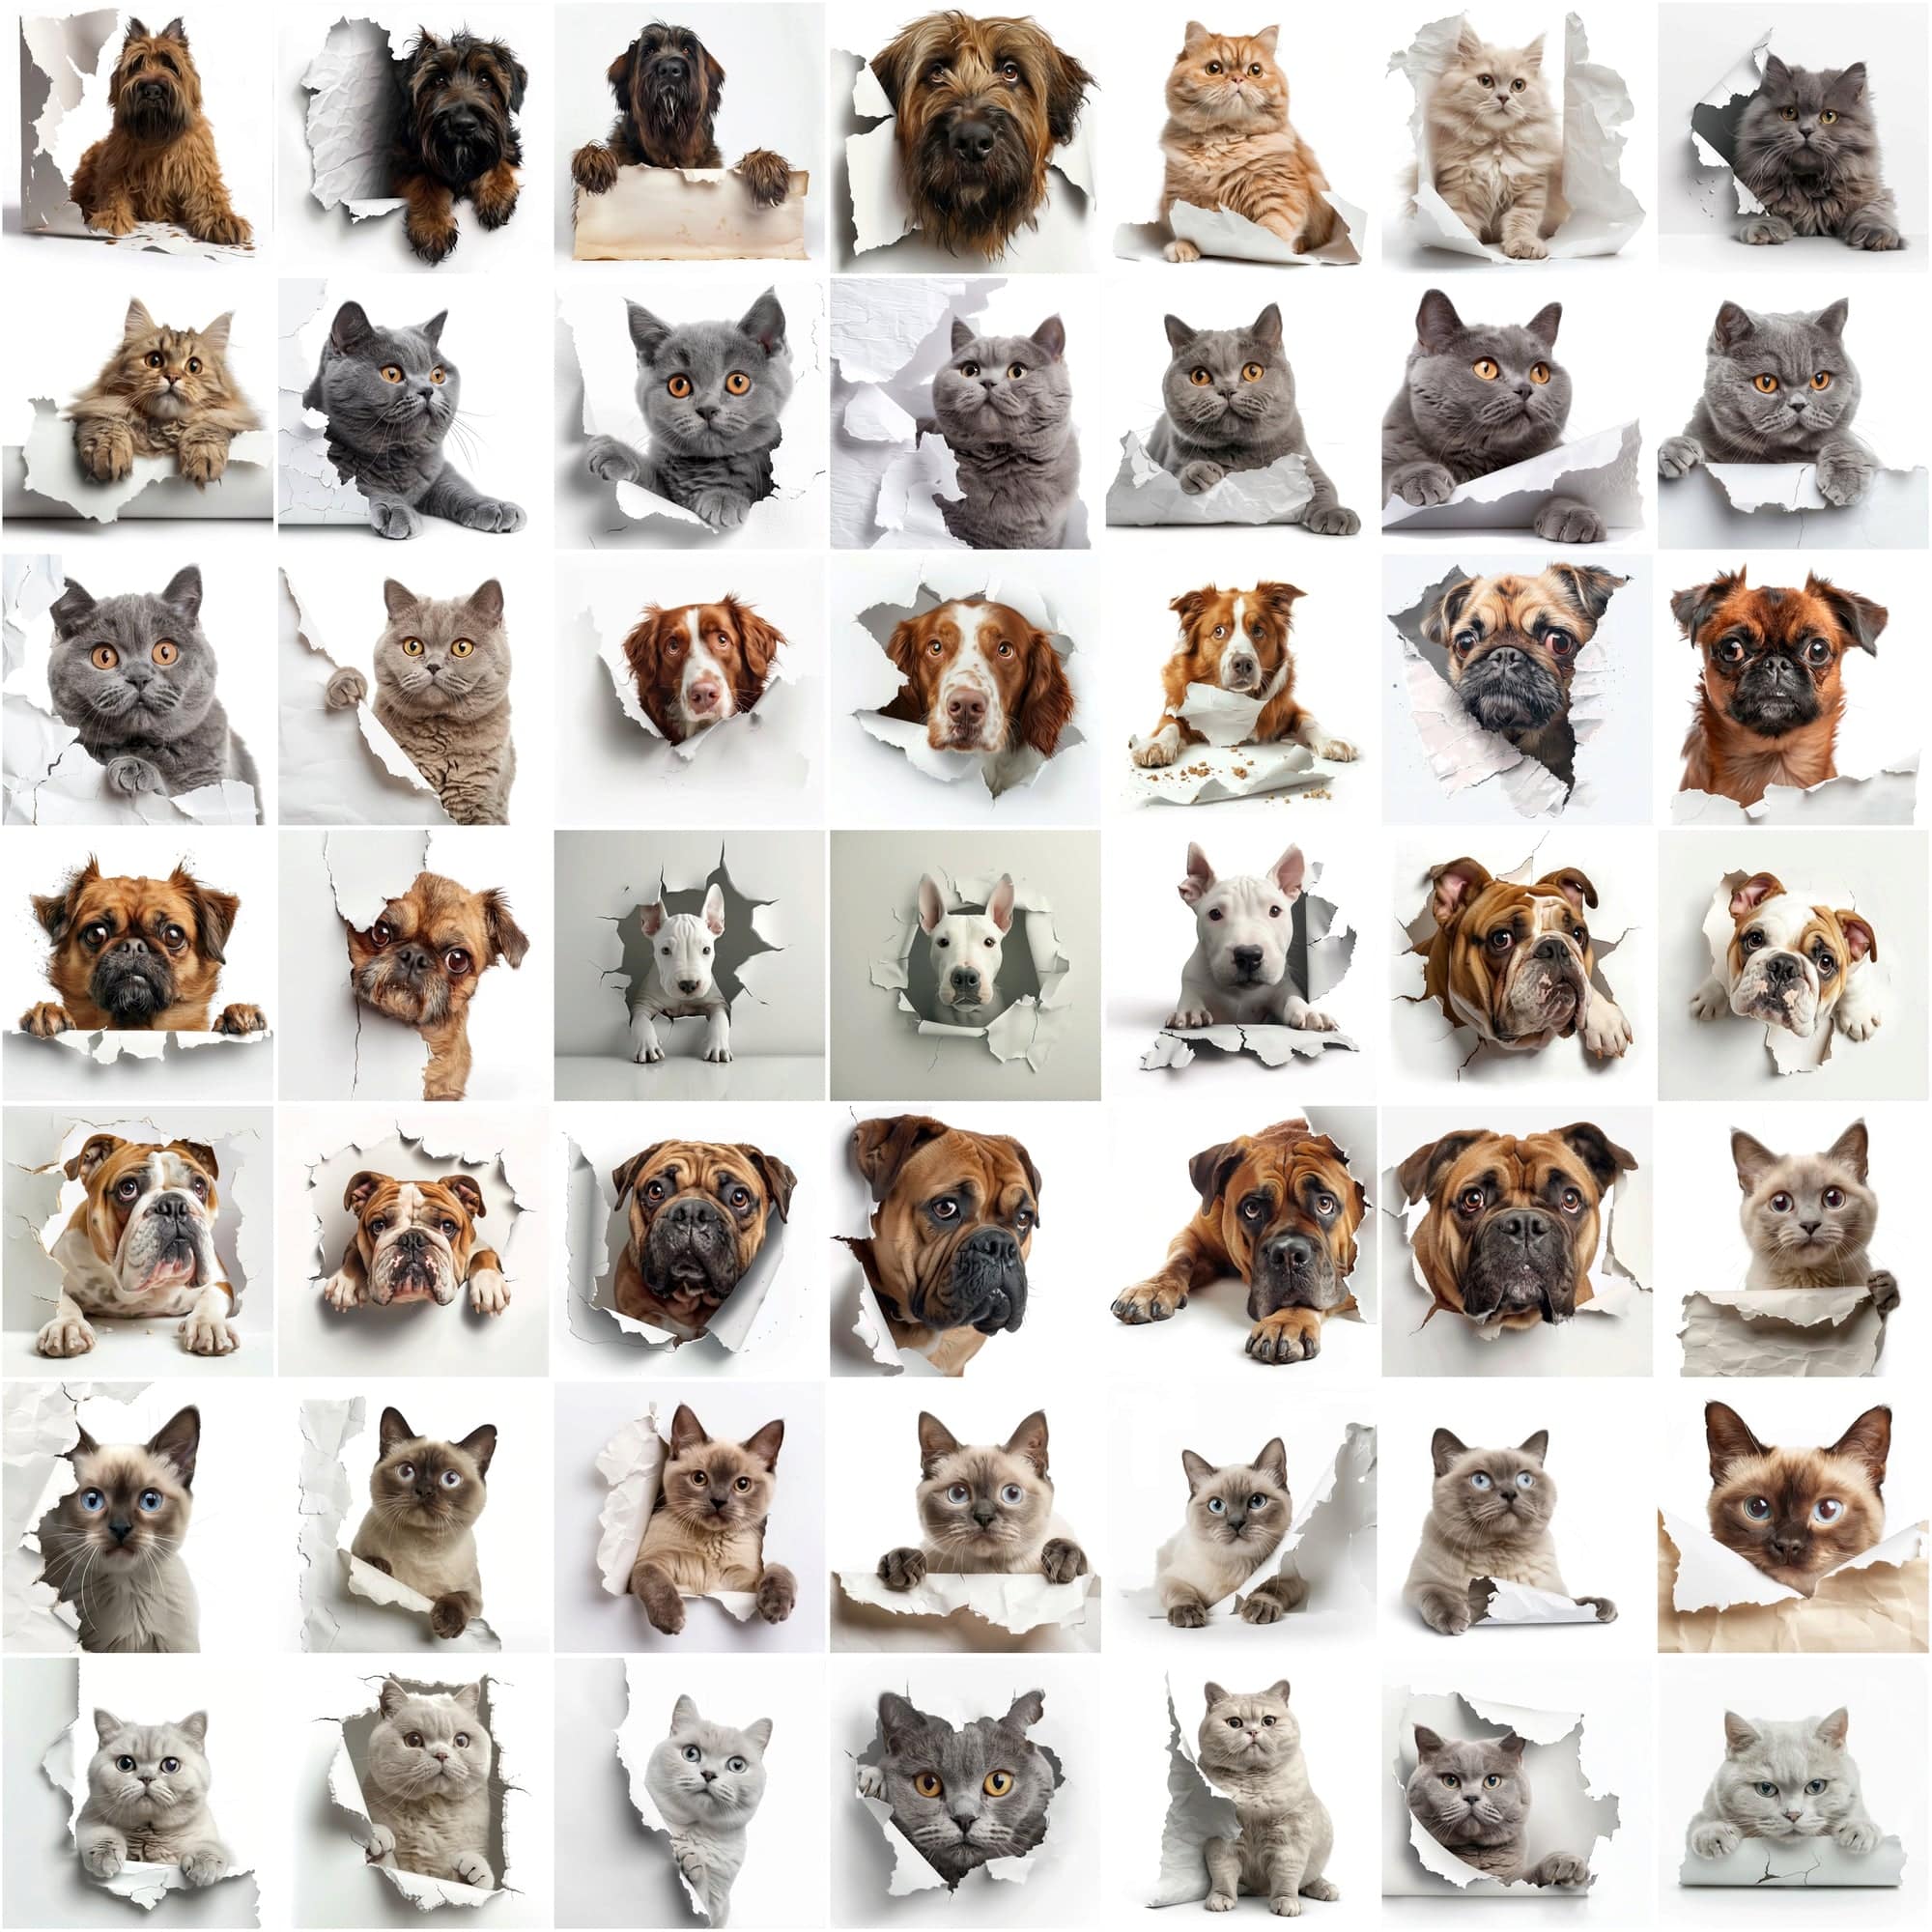 Peekaboo Pets Collection: 730 Adorable Cats & Dogs Hiding Images Digital Download Sumobundle